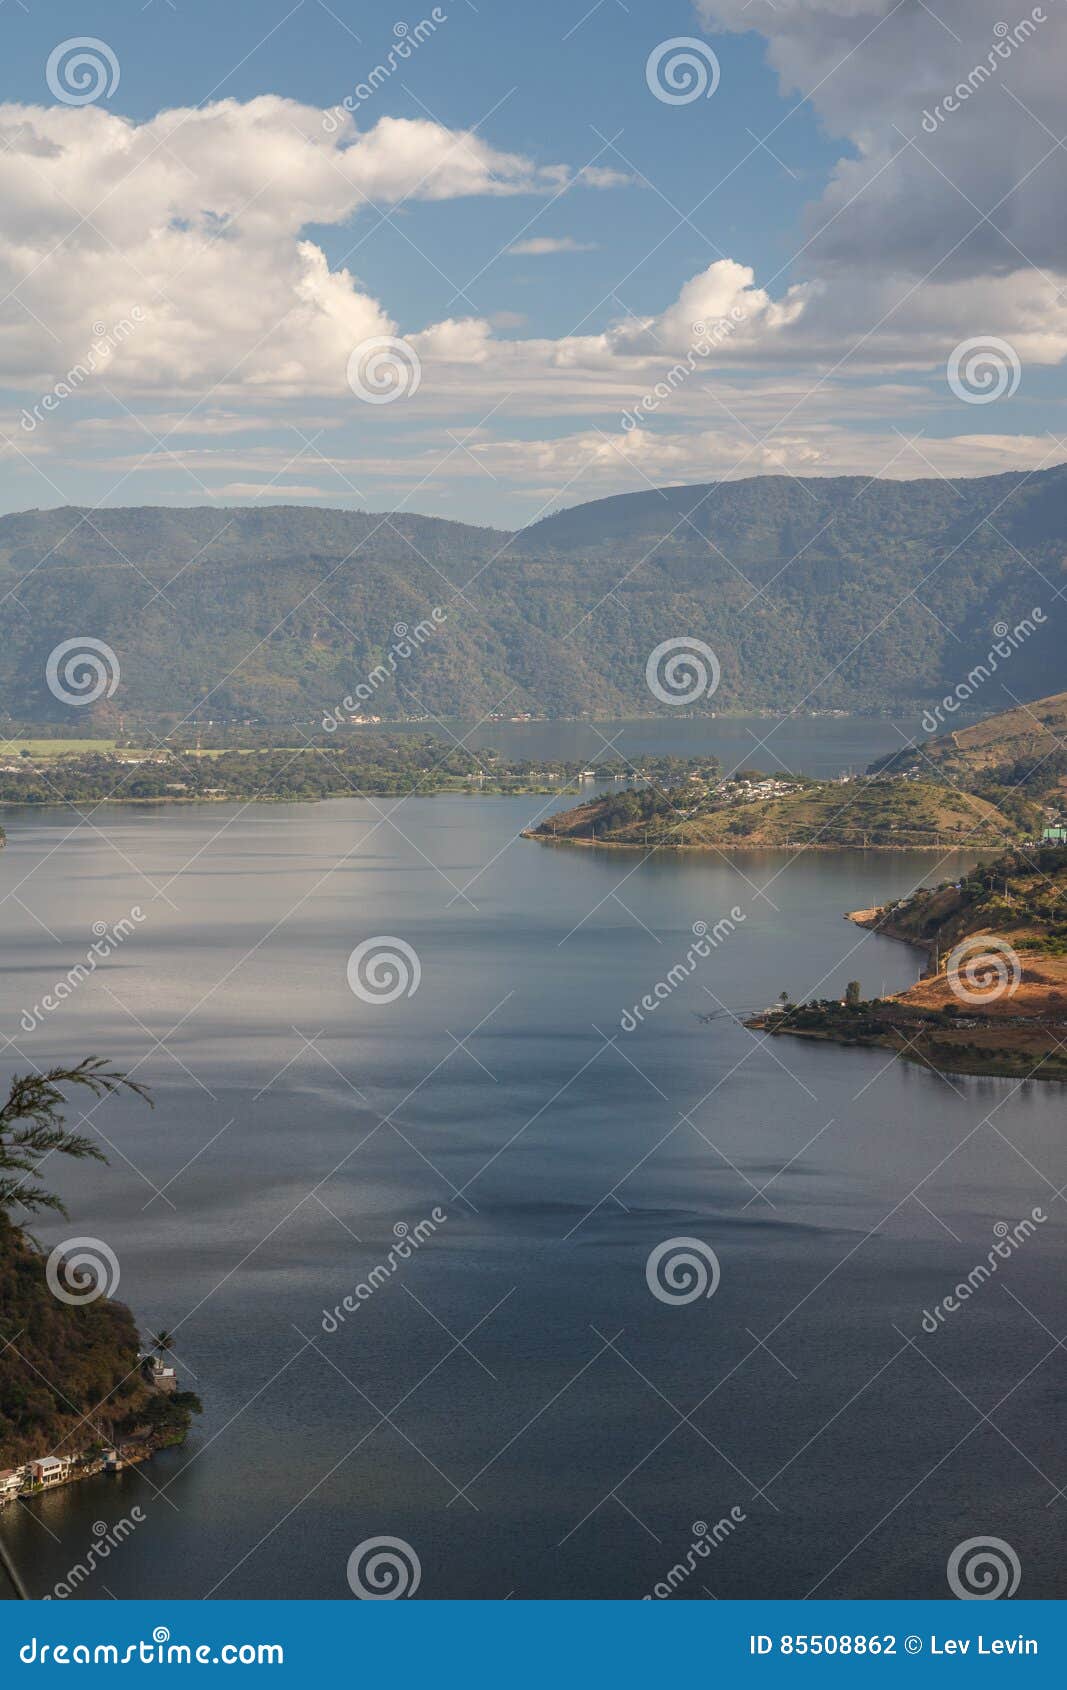 a view over lake amatitlan